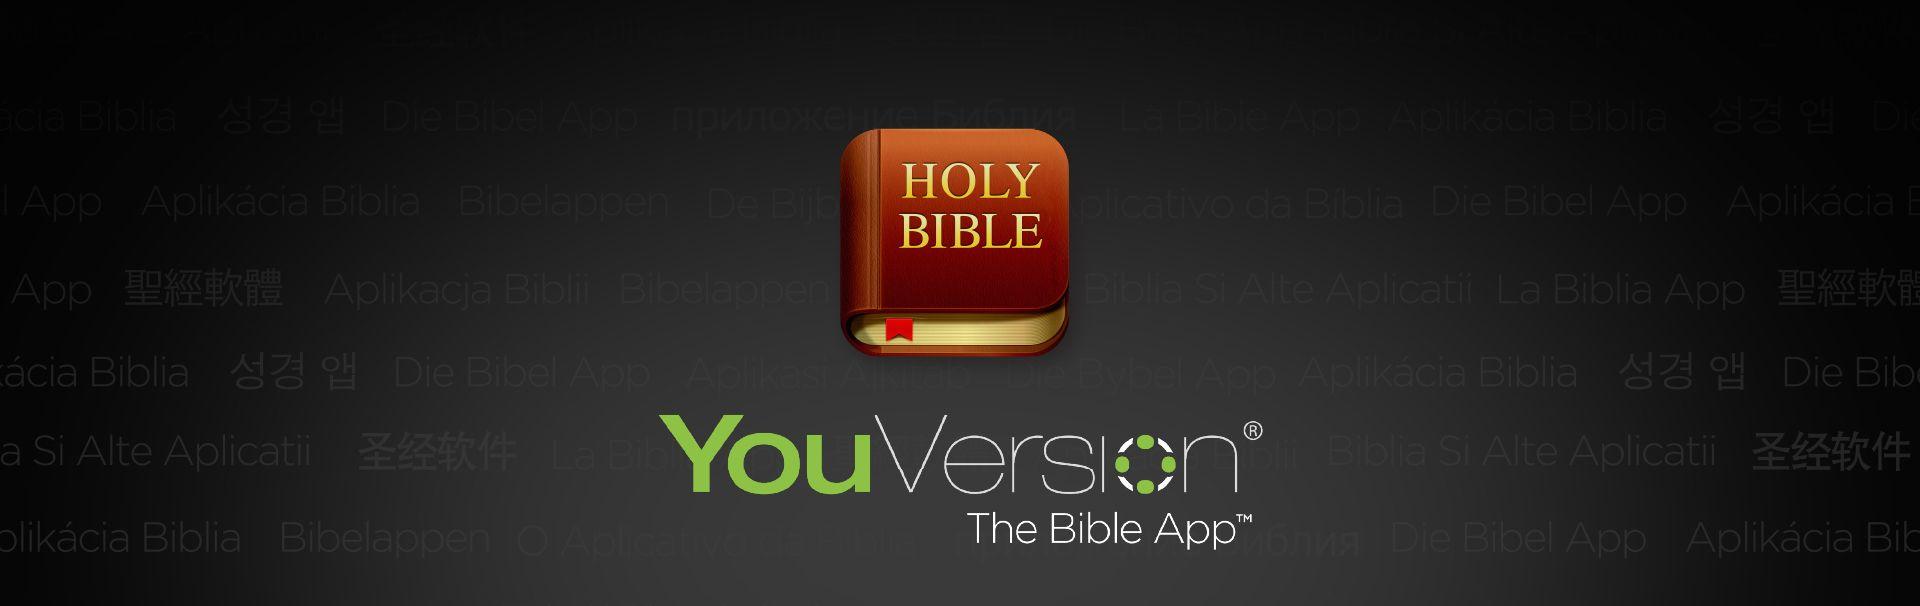 Bible App Logo - Dear @YouVersion, Add a 